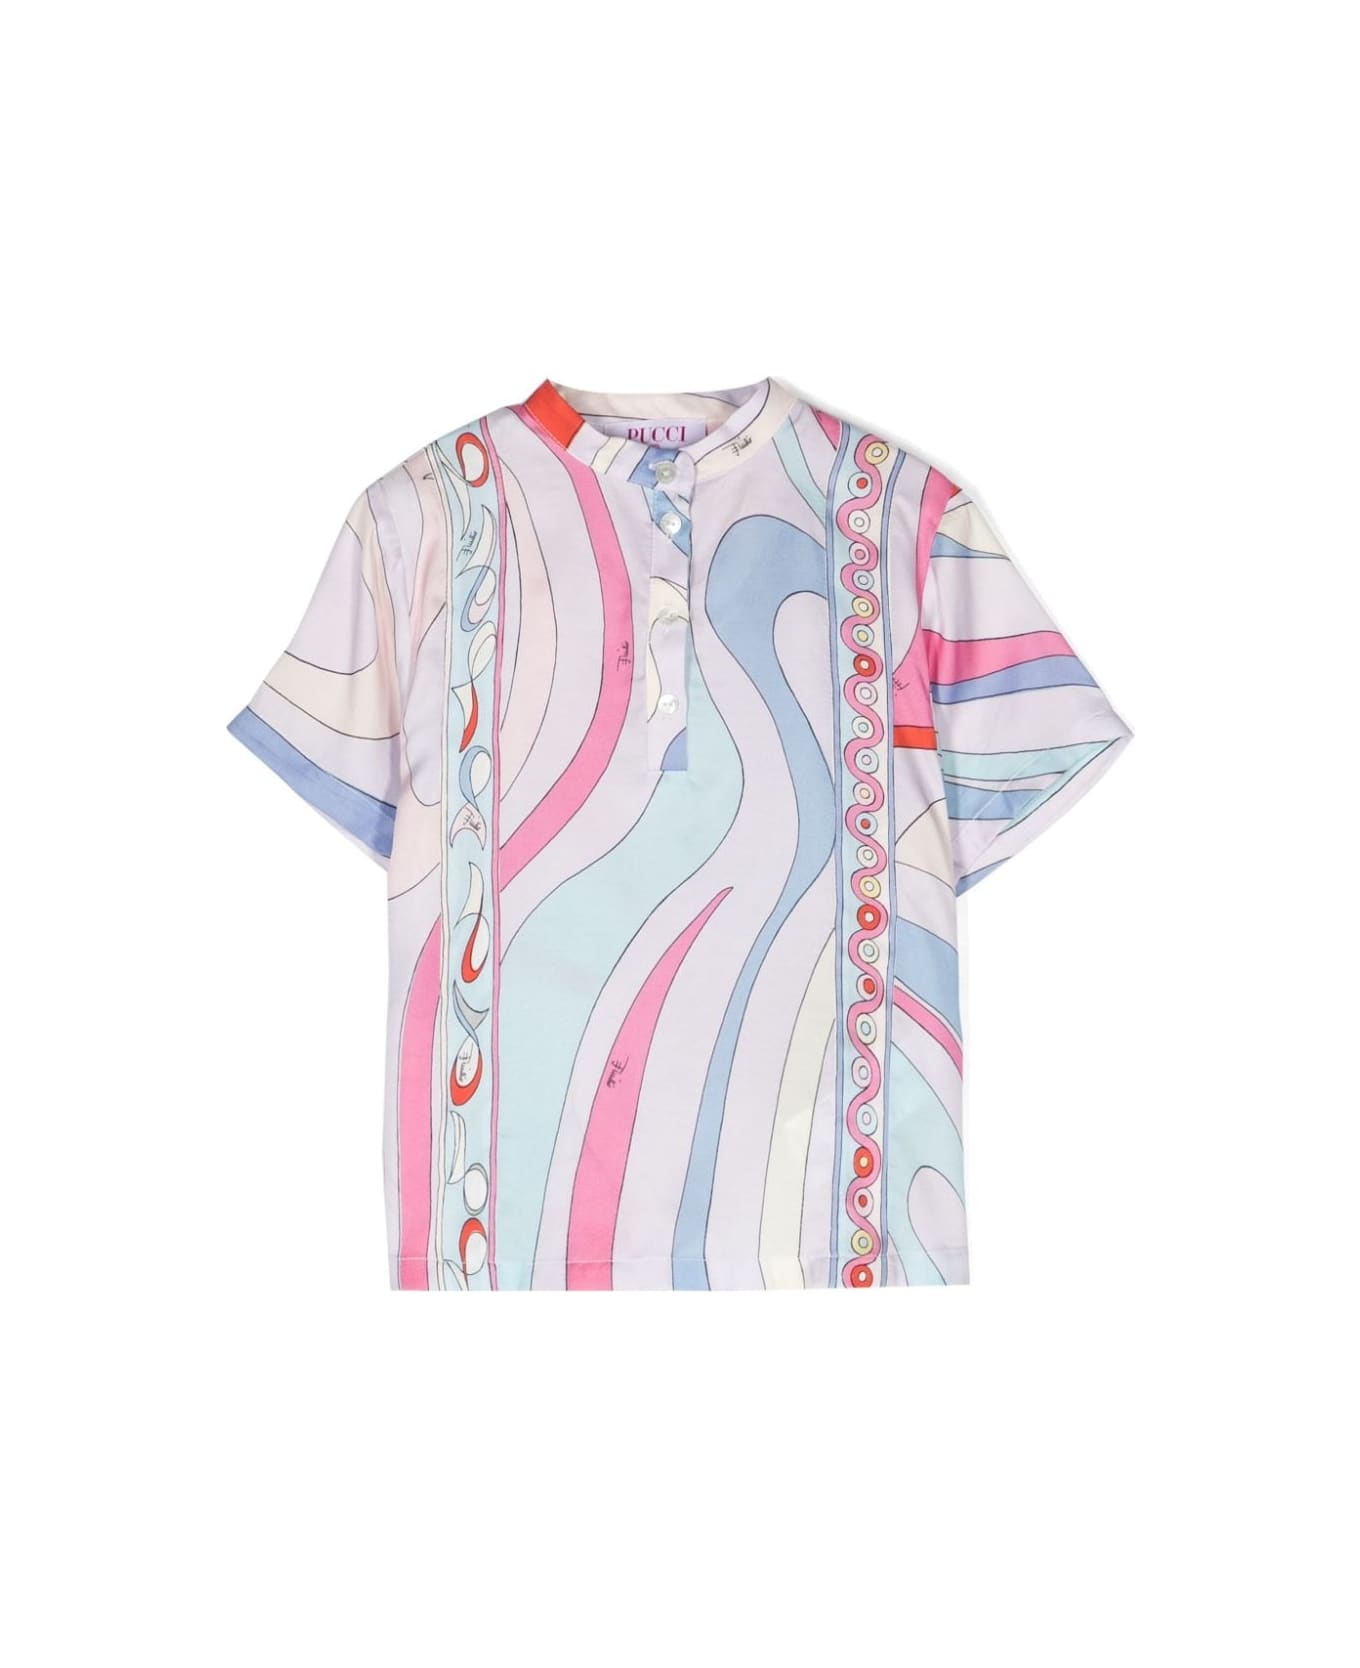 Pucci Shirt With Iris Print - Cream